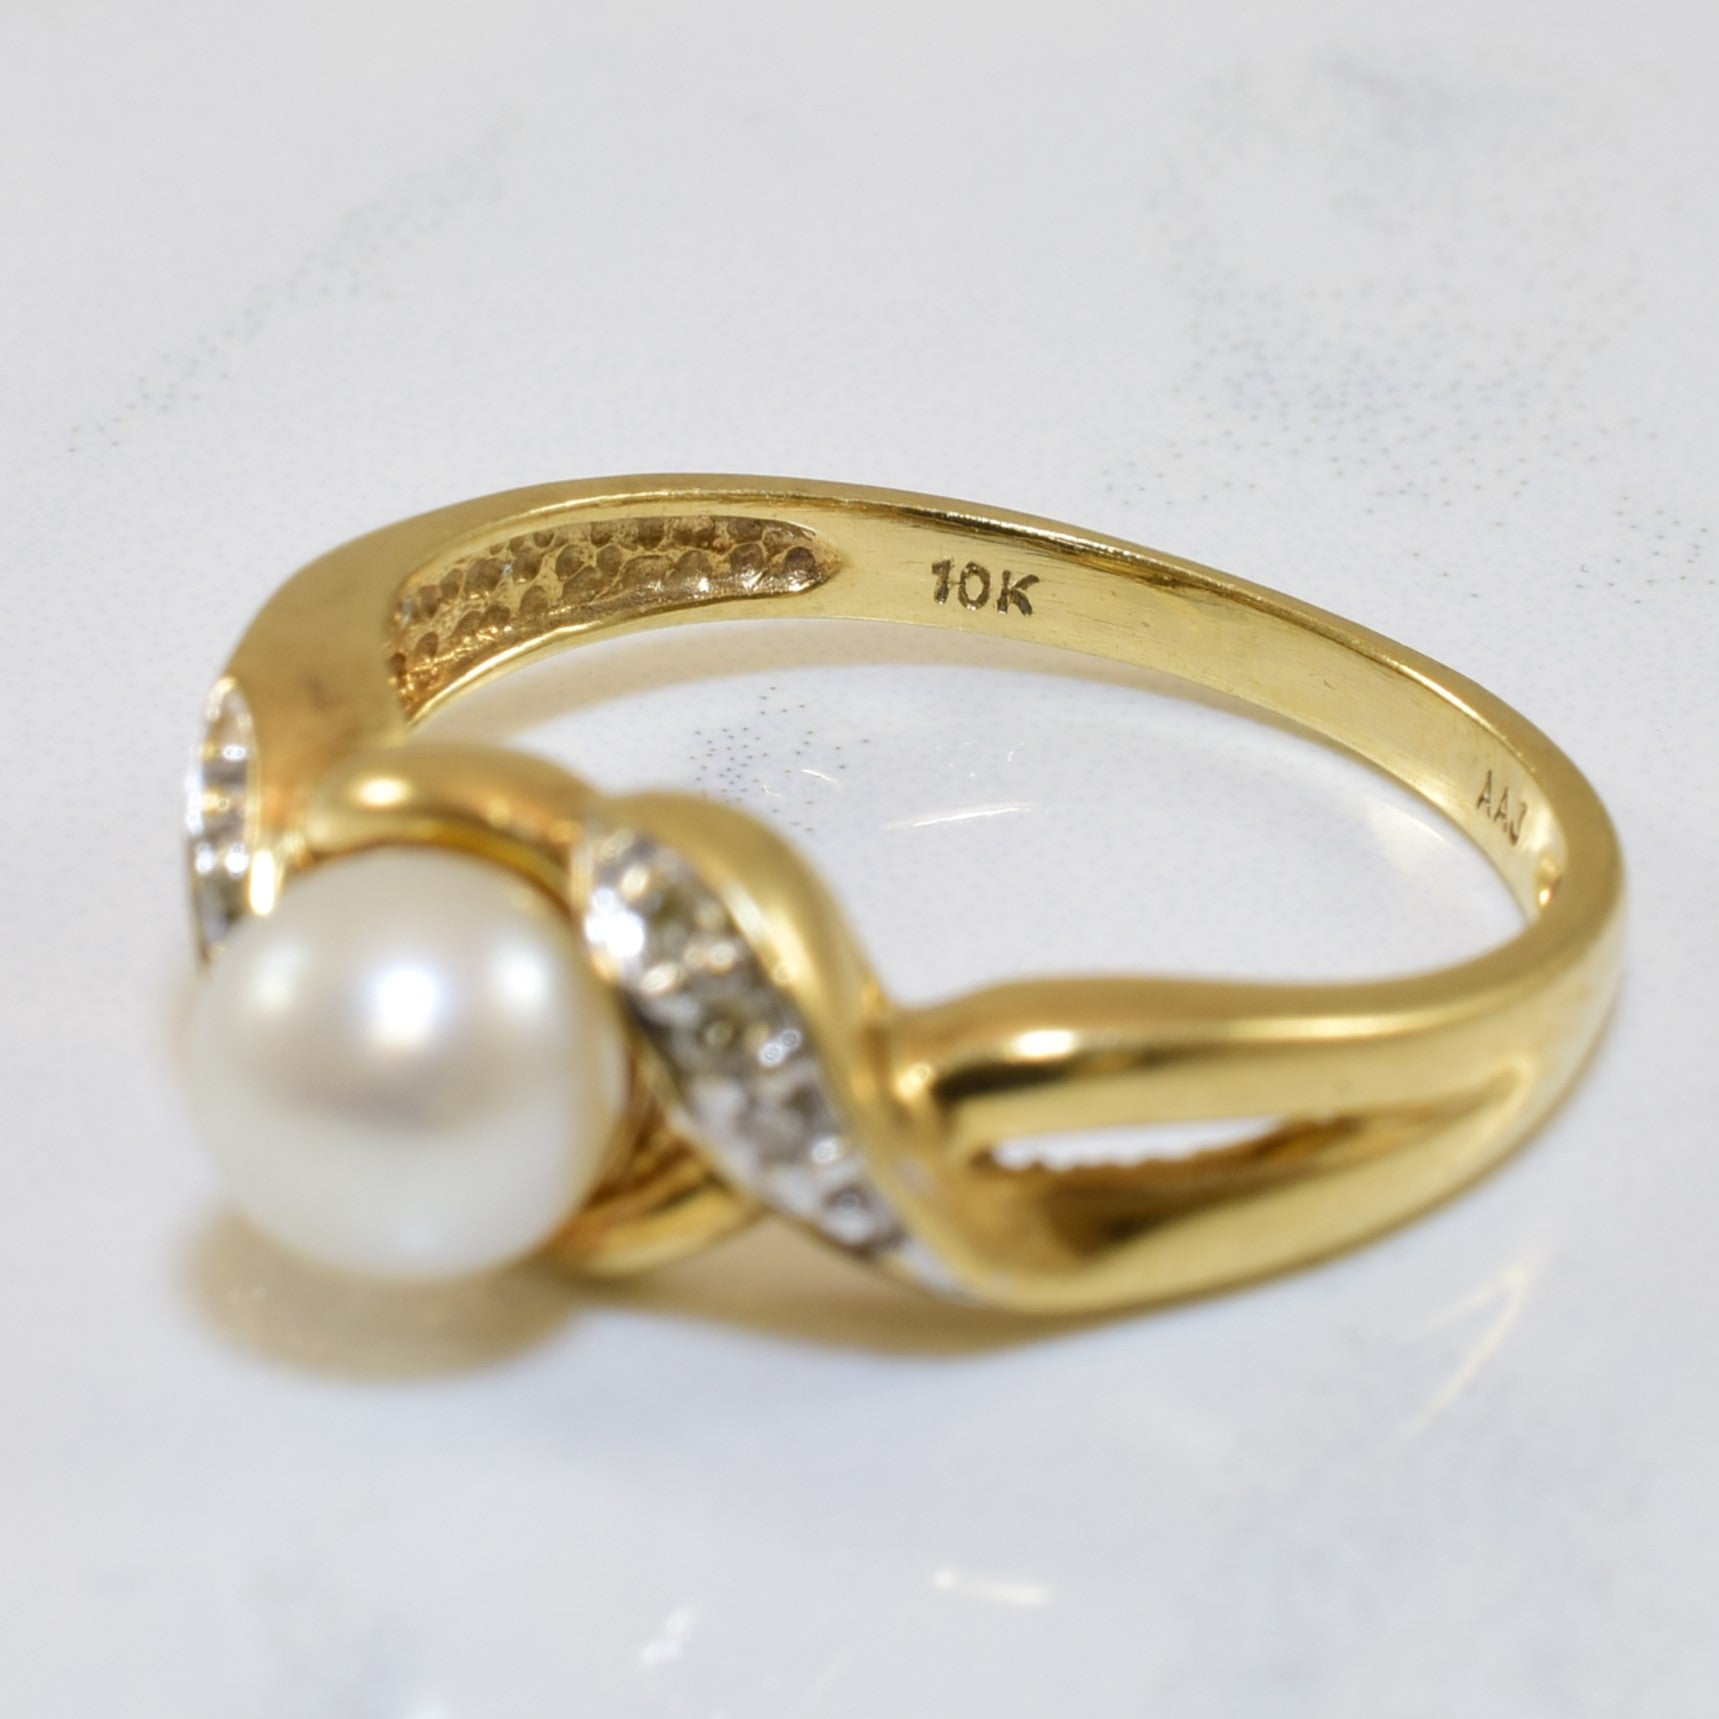 Diamond & Pearl Bypass Twist Ring | 1.29ctw | SZ 6.5 |